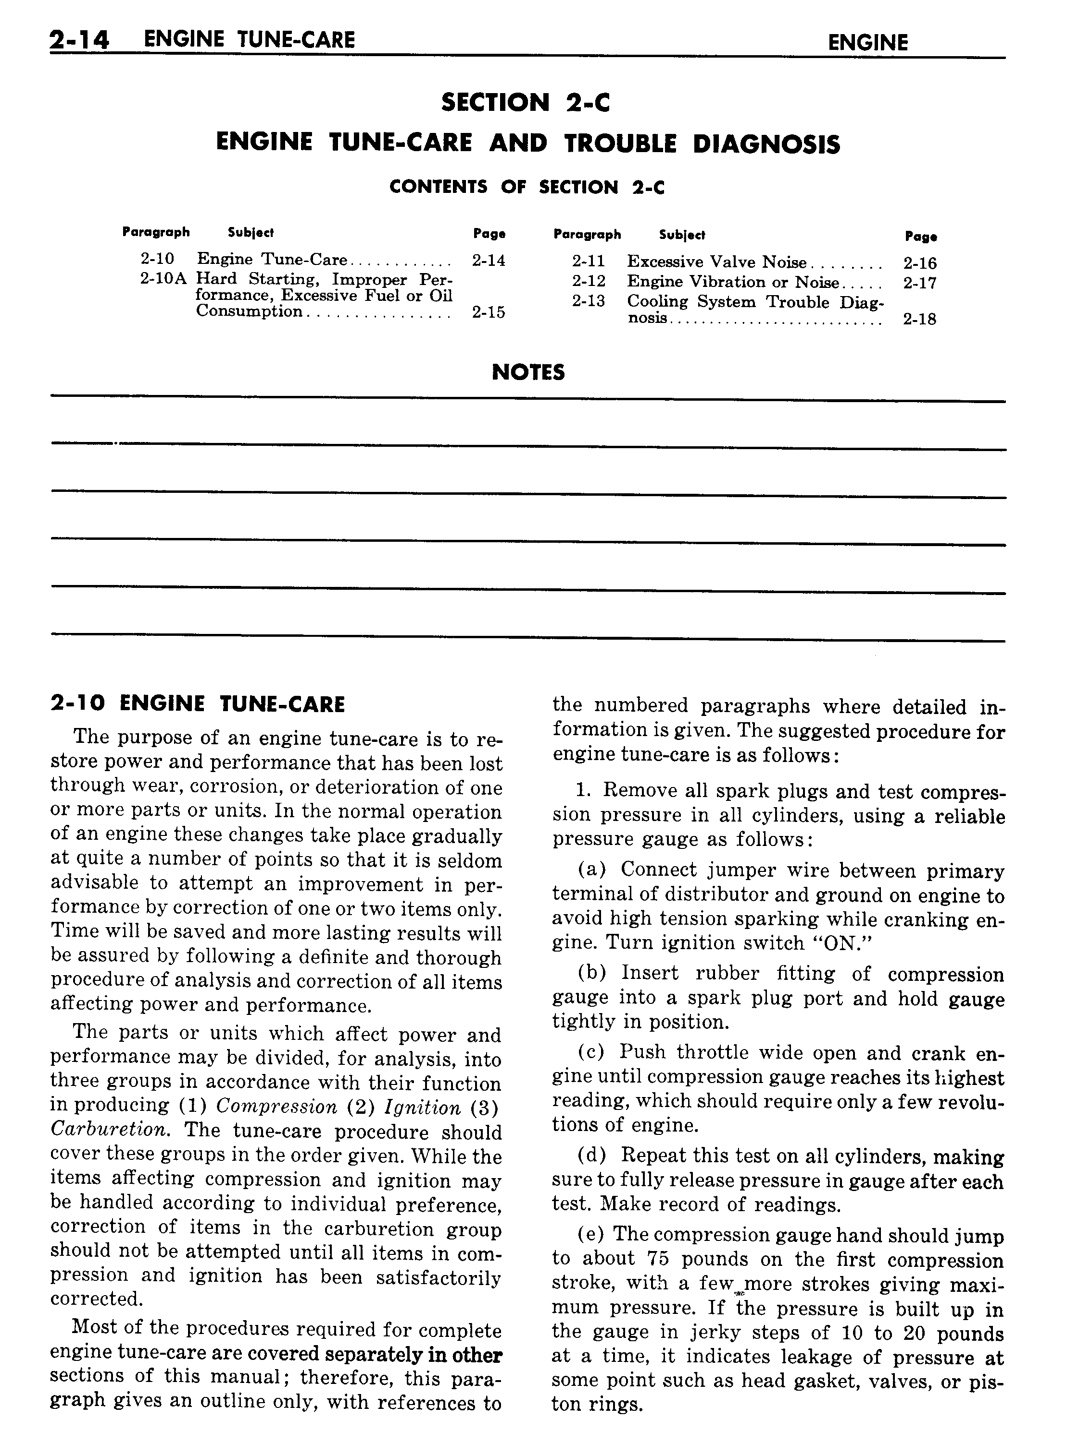 n_03 1957 Buick Shop Manual - Engine-014-014.jpg